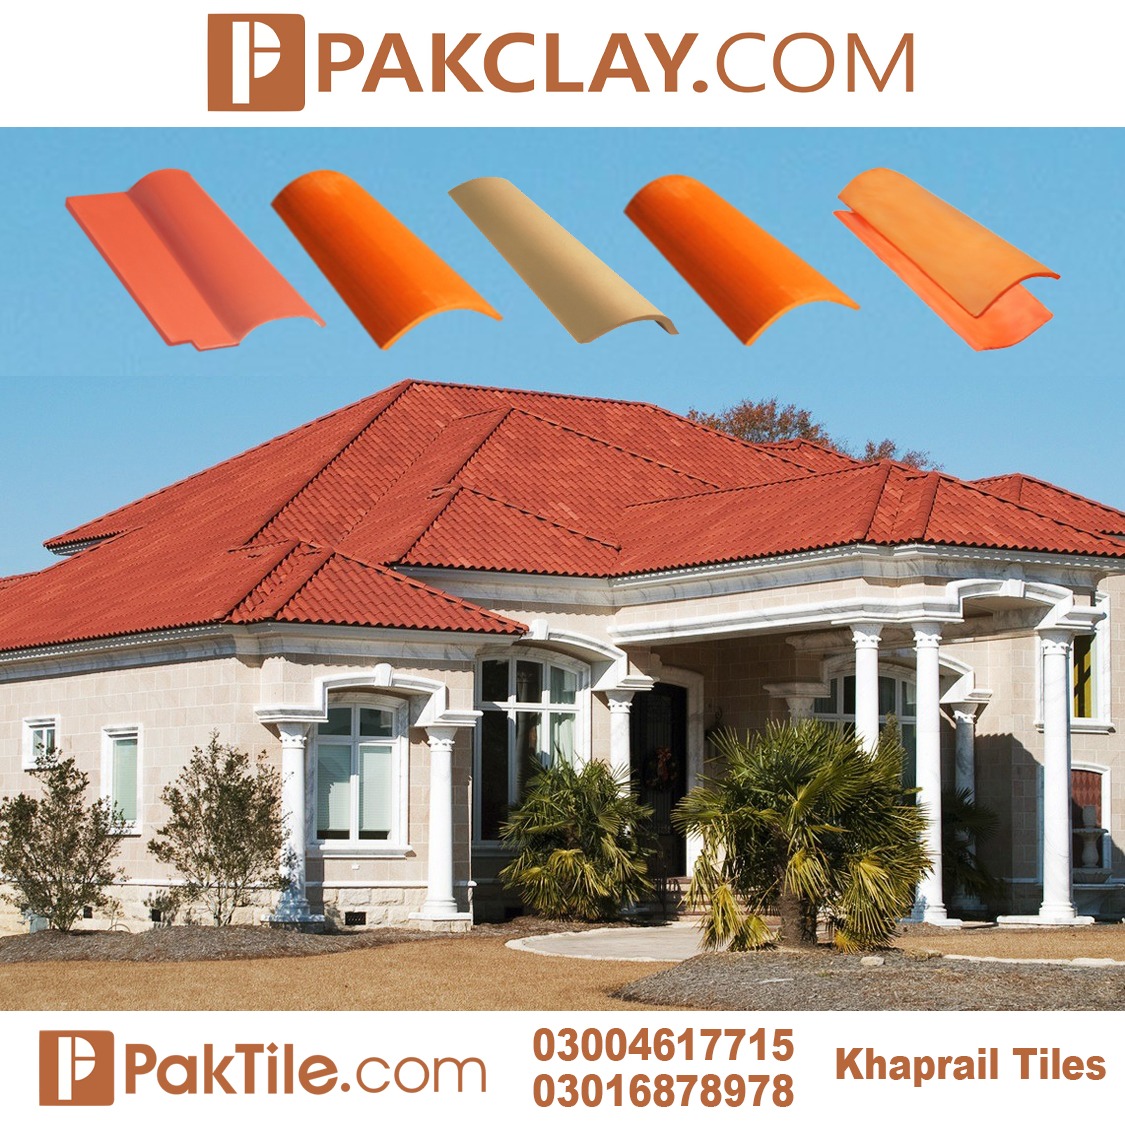 Pak clay roof tiles in Pakistan